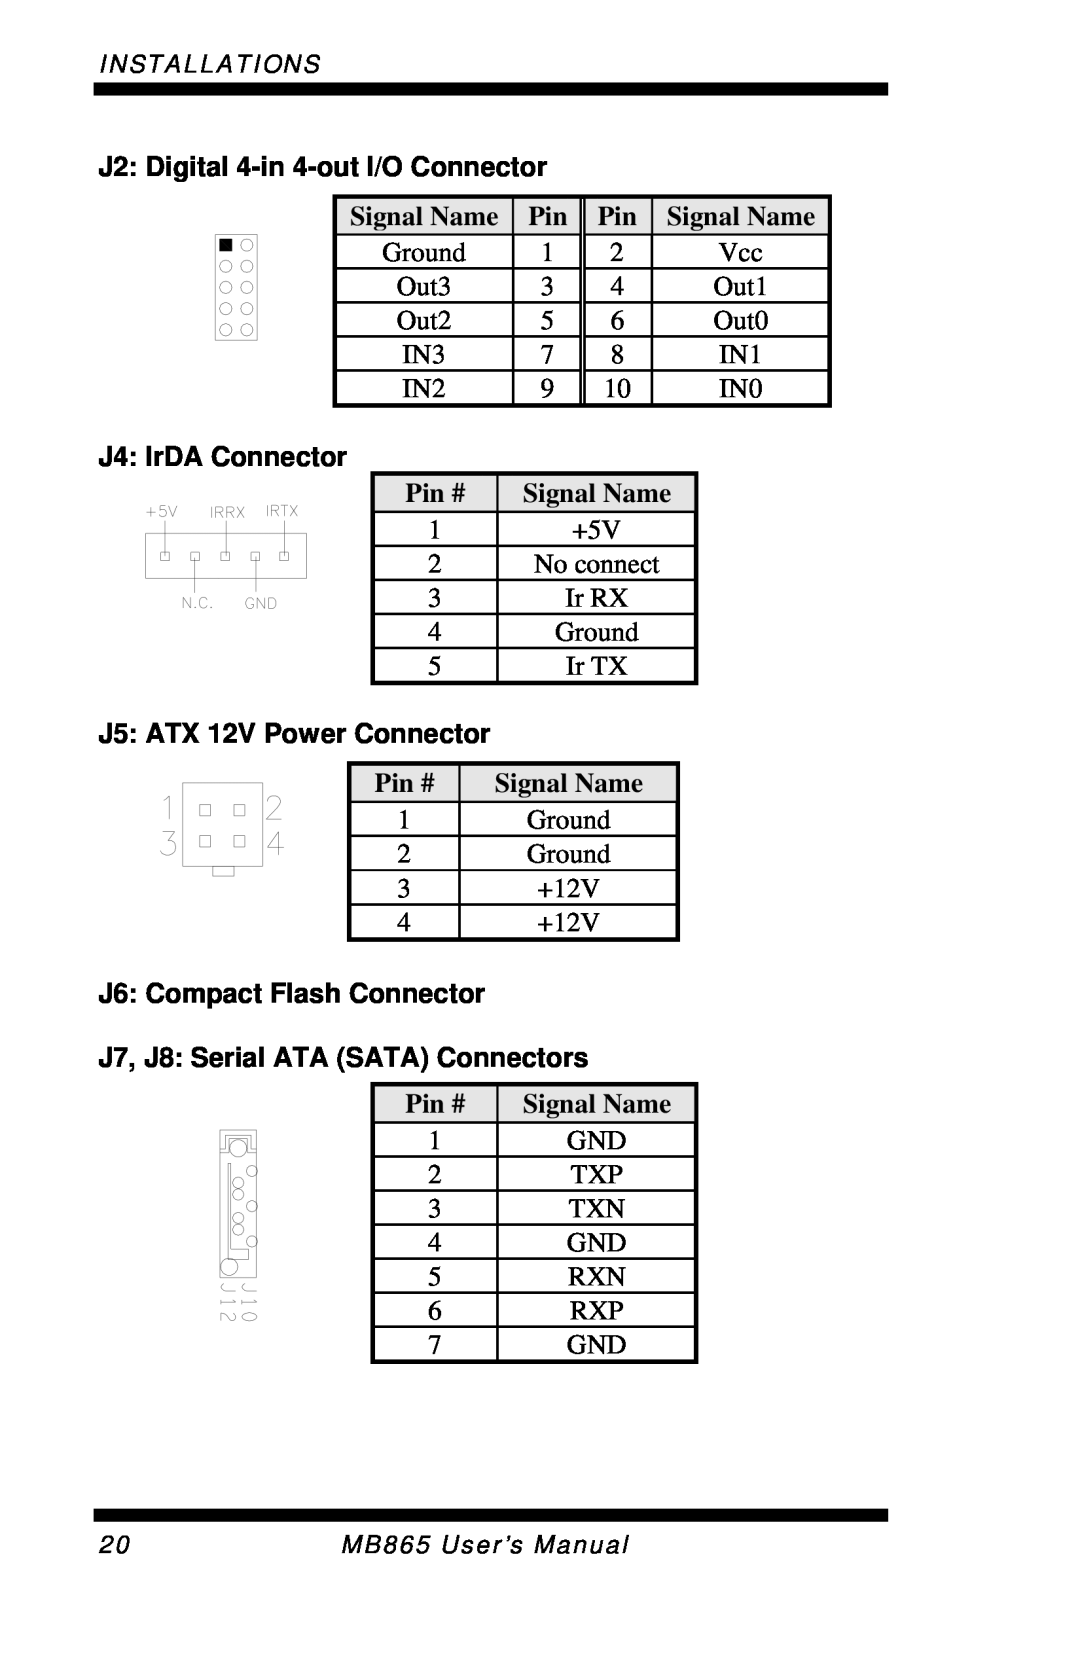 Intel MB865 J2 Digital 4-in 4-outI/O Connector, J4 IrDA Connector, J5 ATX 12V Power Connector, J6 Compact Flash Connector 